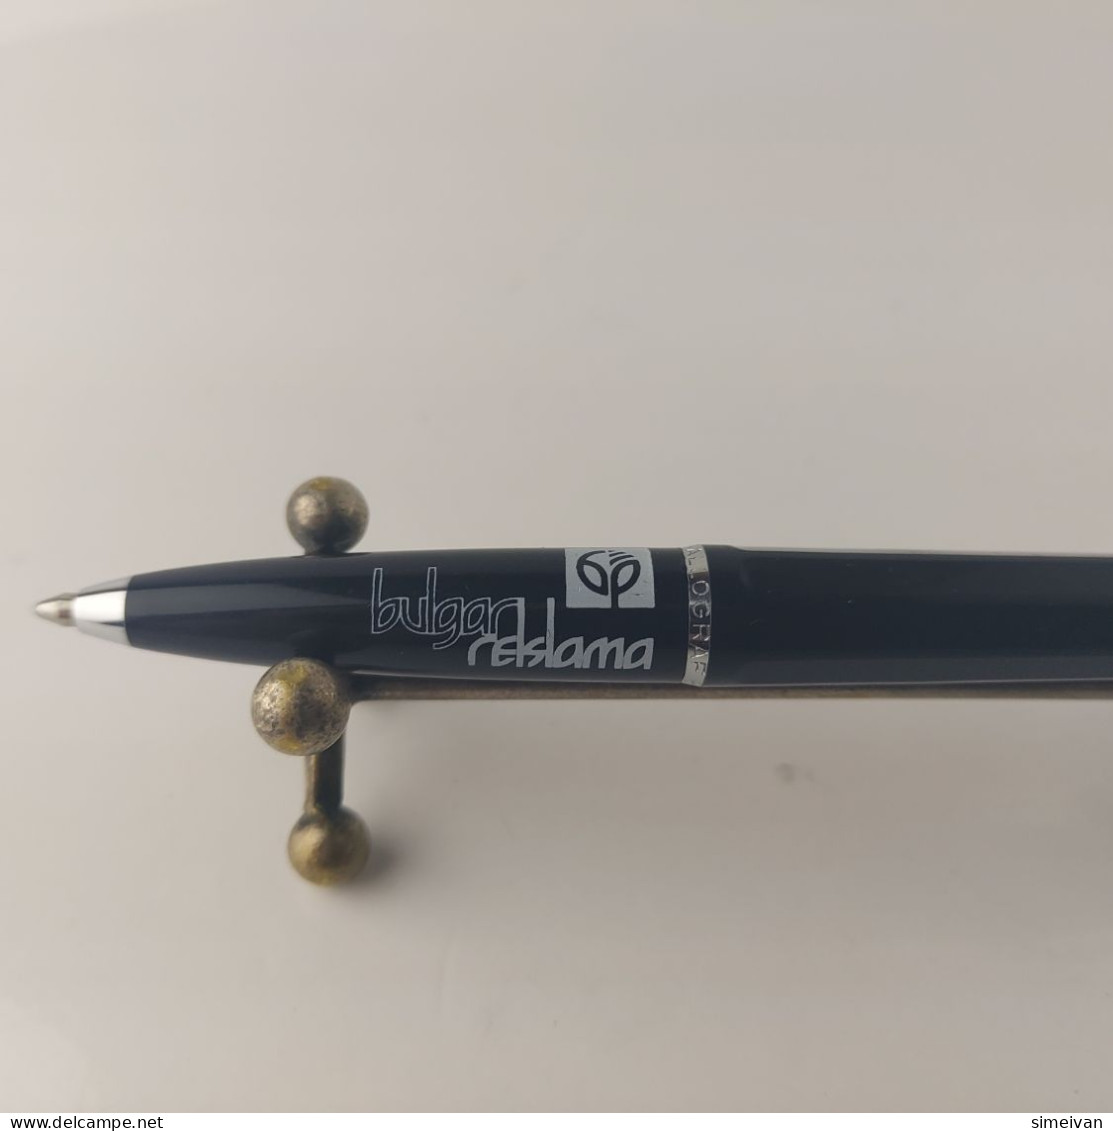 Vintage Ballograf Epoca Ballpoint Pen Black Chrome Trim Made In Sweden #5525 - Schreibgerät